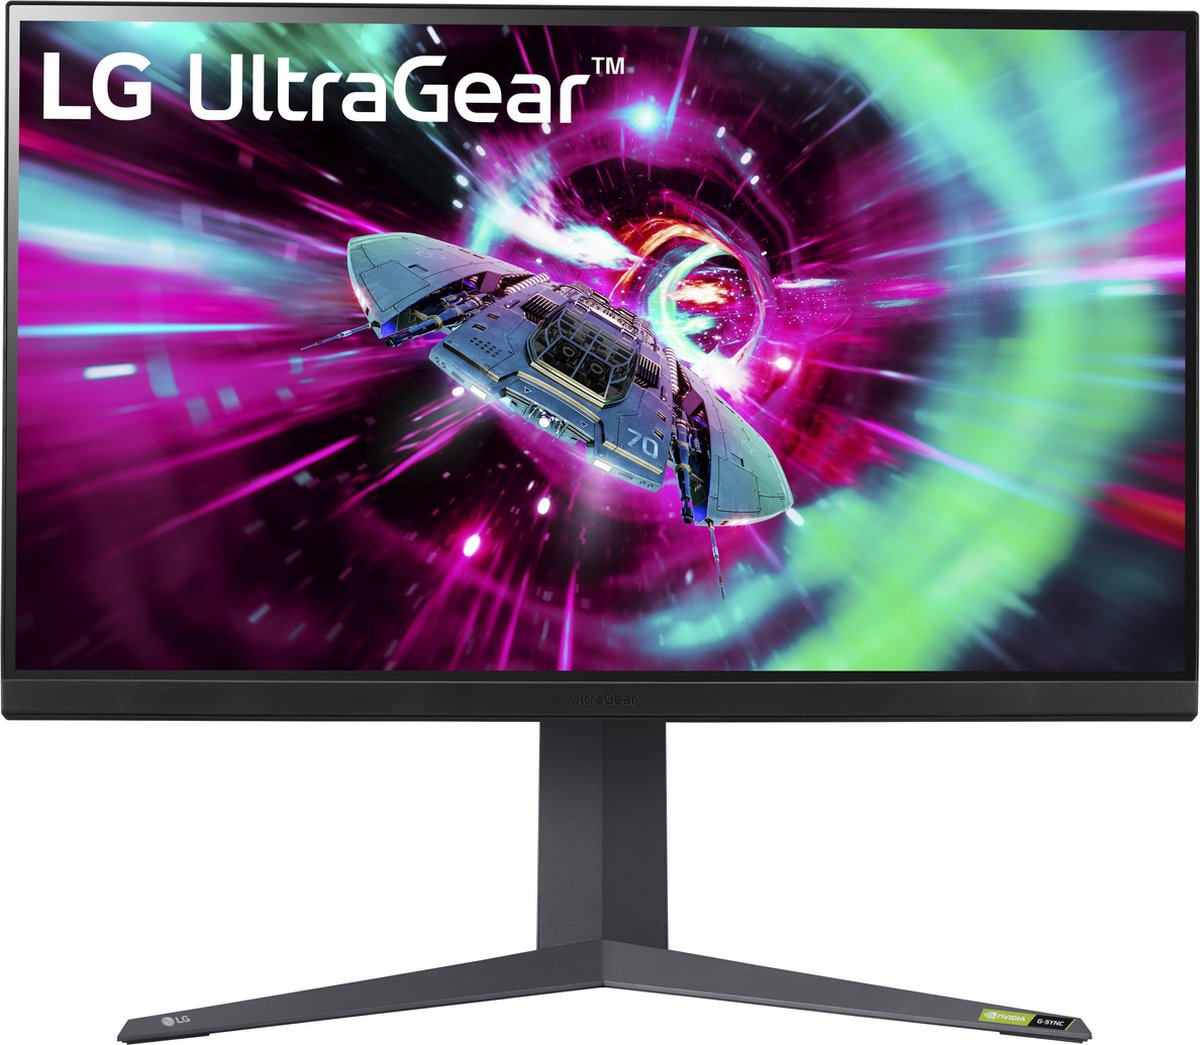 LG UltraGear 32GR93U-B - 4K IPS Gaming Monitor - 144hz - HDMI 2.1 - 32 inch review